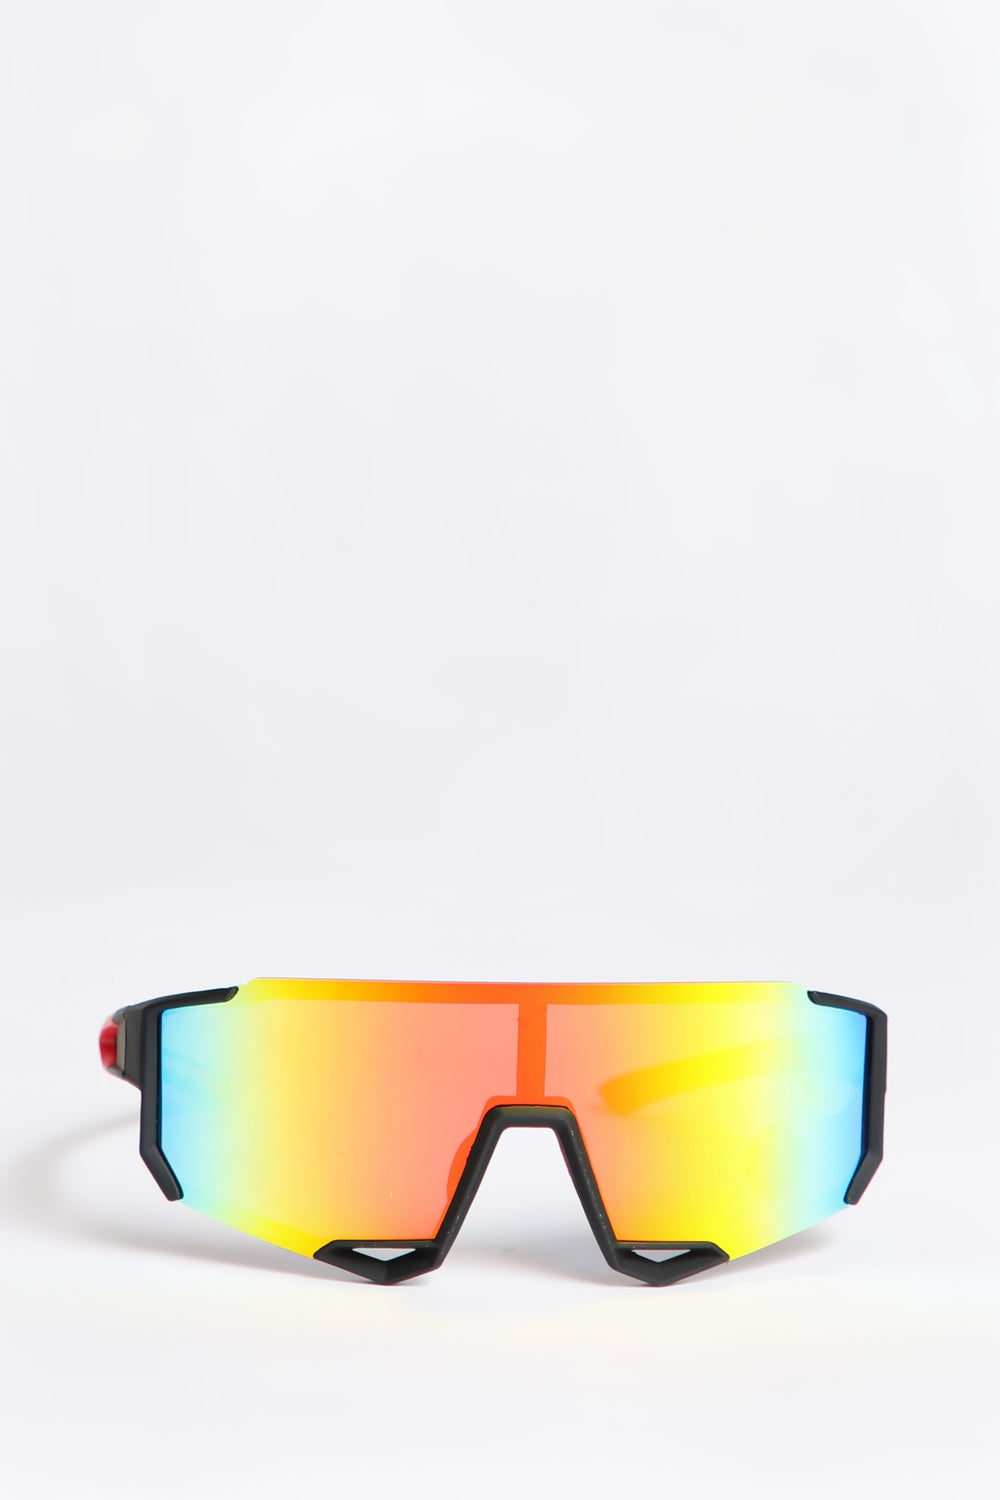 West49 Sport Shield Sunglasses West49 Sport Shield Sunglasses